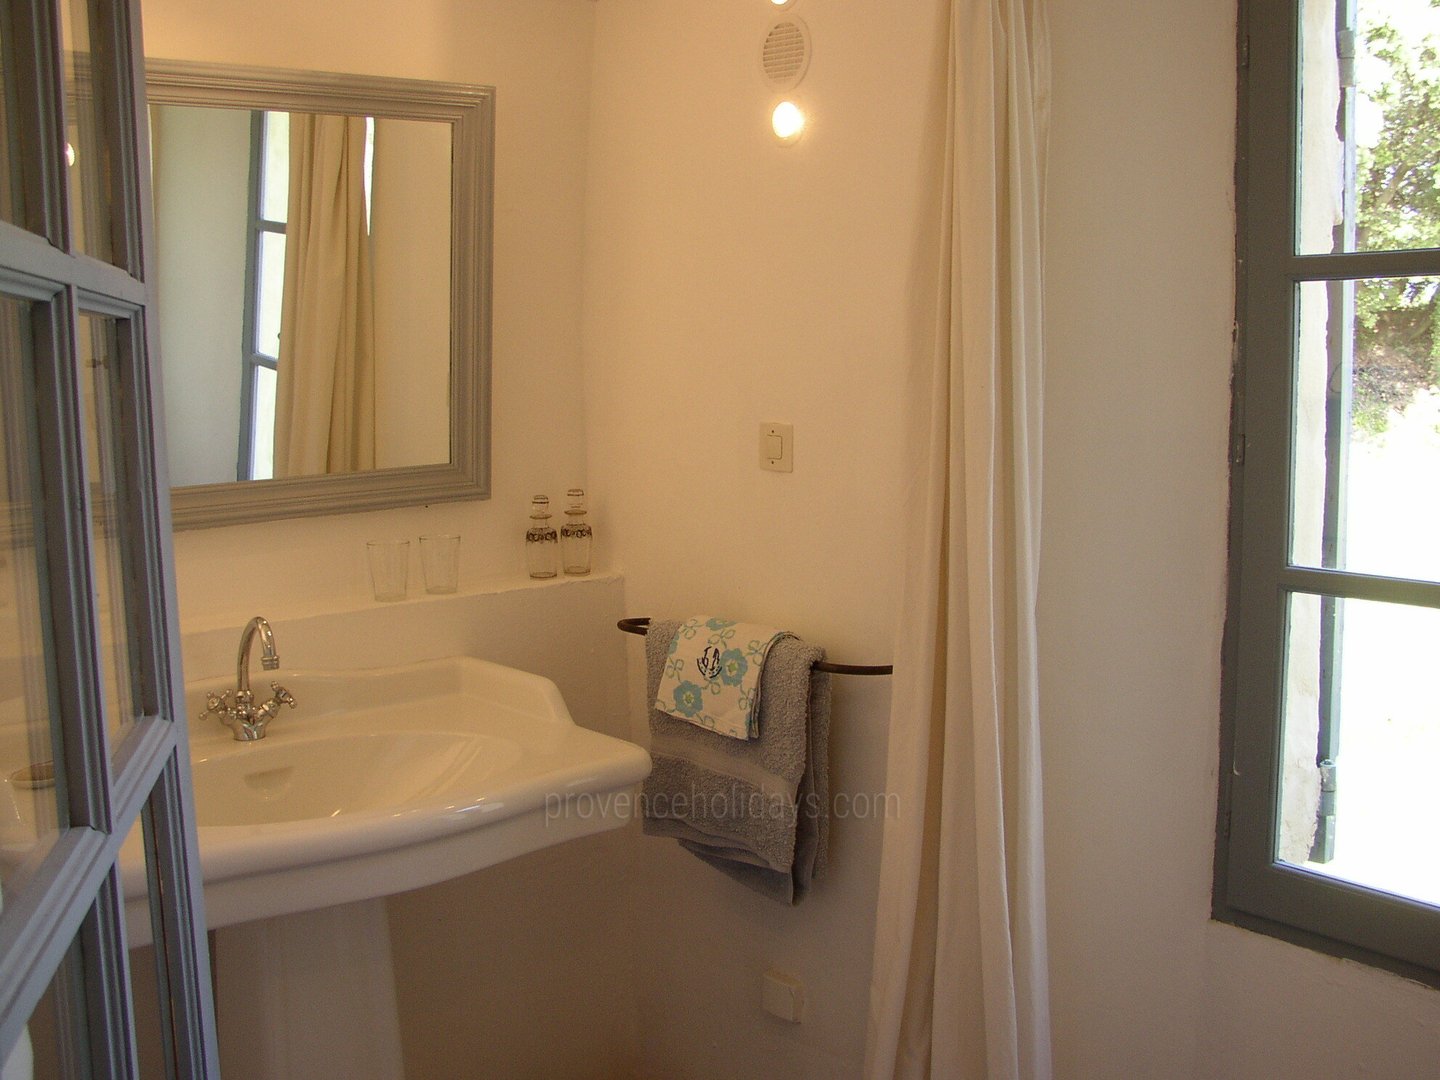 47 - Chez Martine: Villa: Bathroom